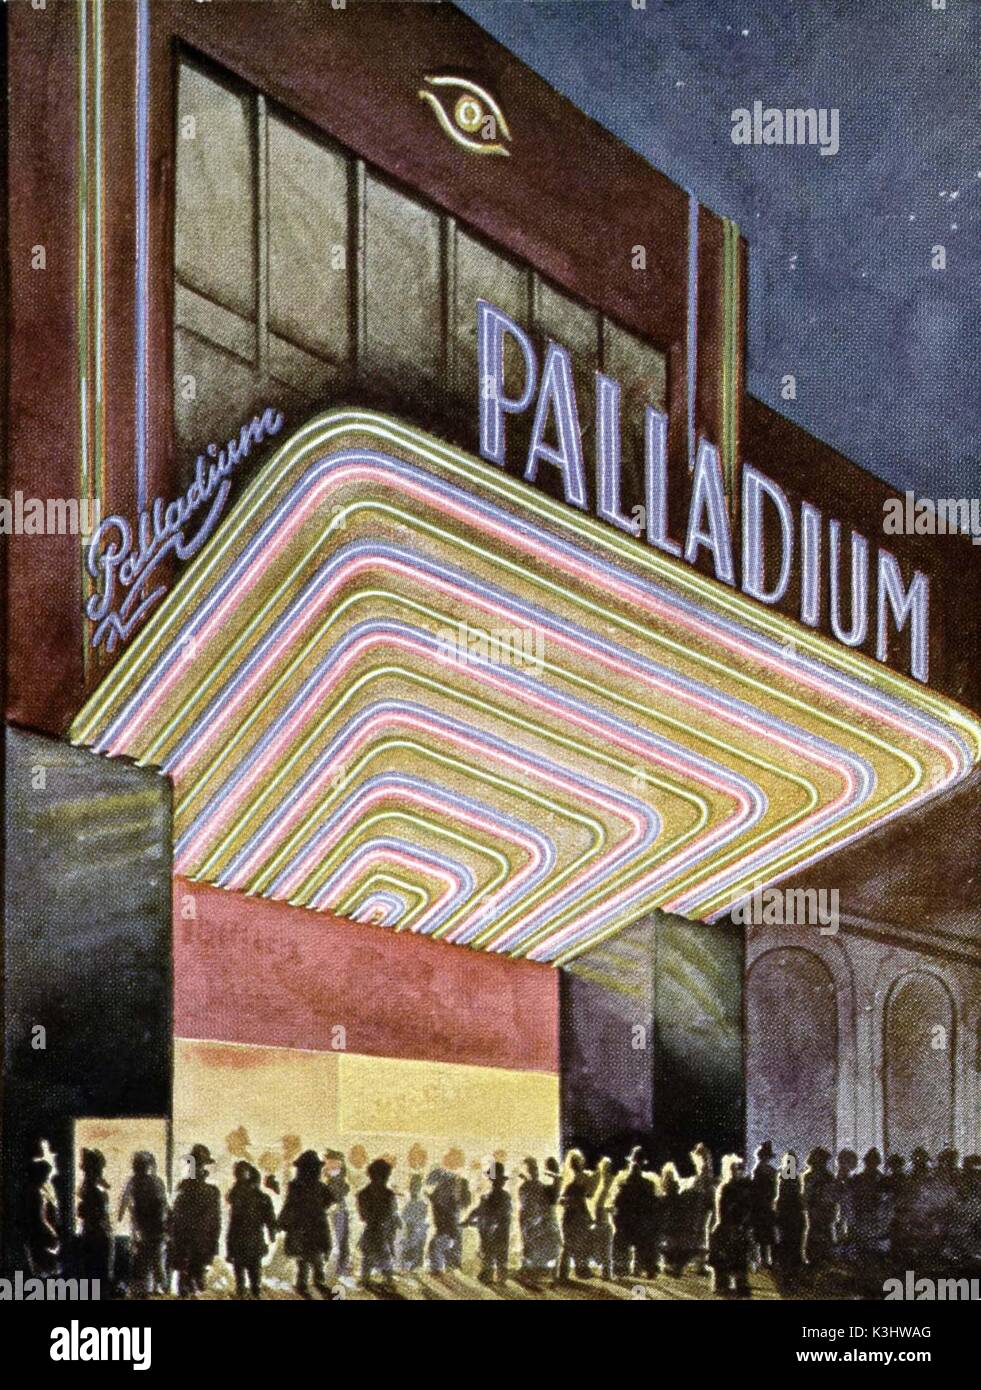 Palladium cinema hi-res stock photography and images - Alamy